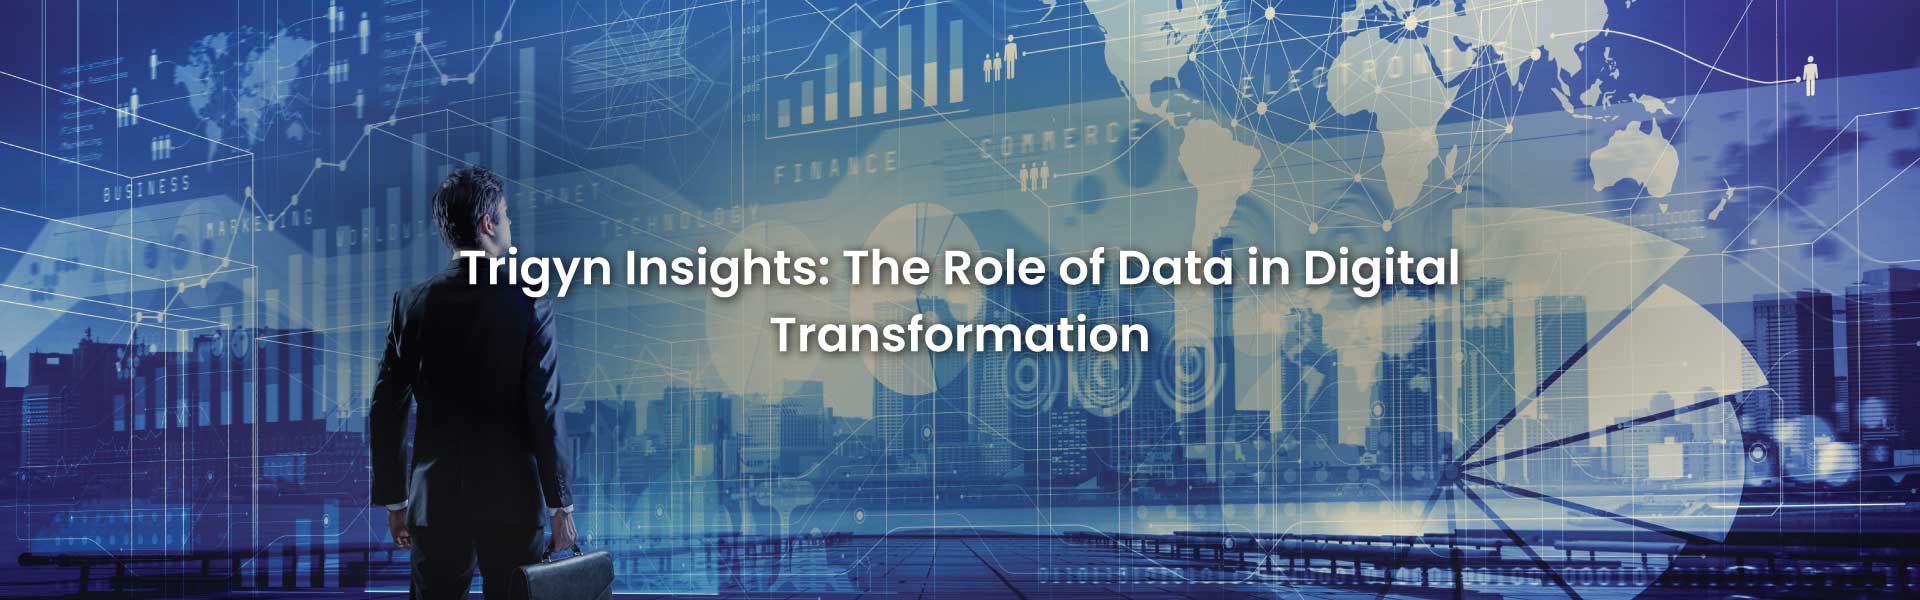 Data in Digital Transformation 